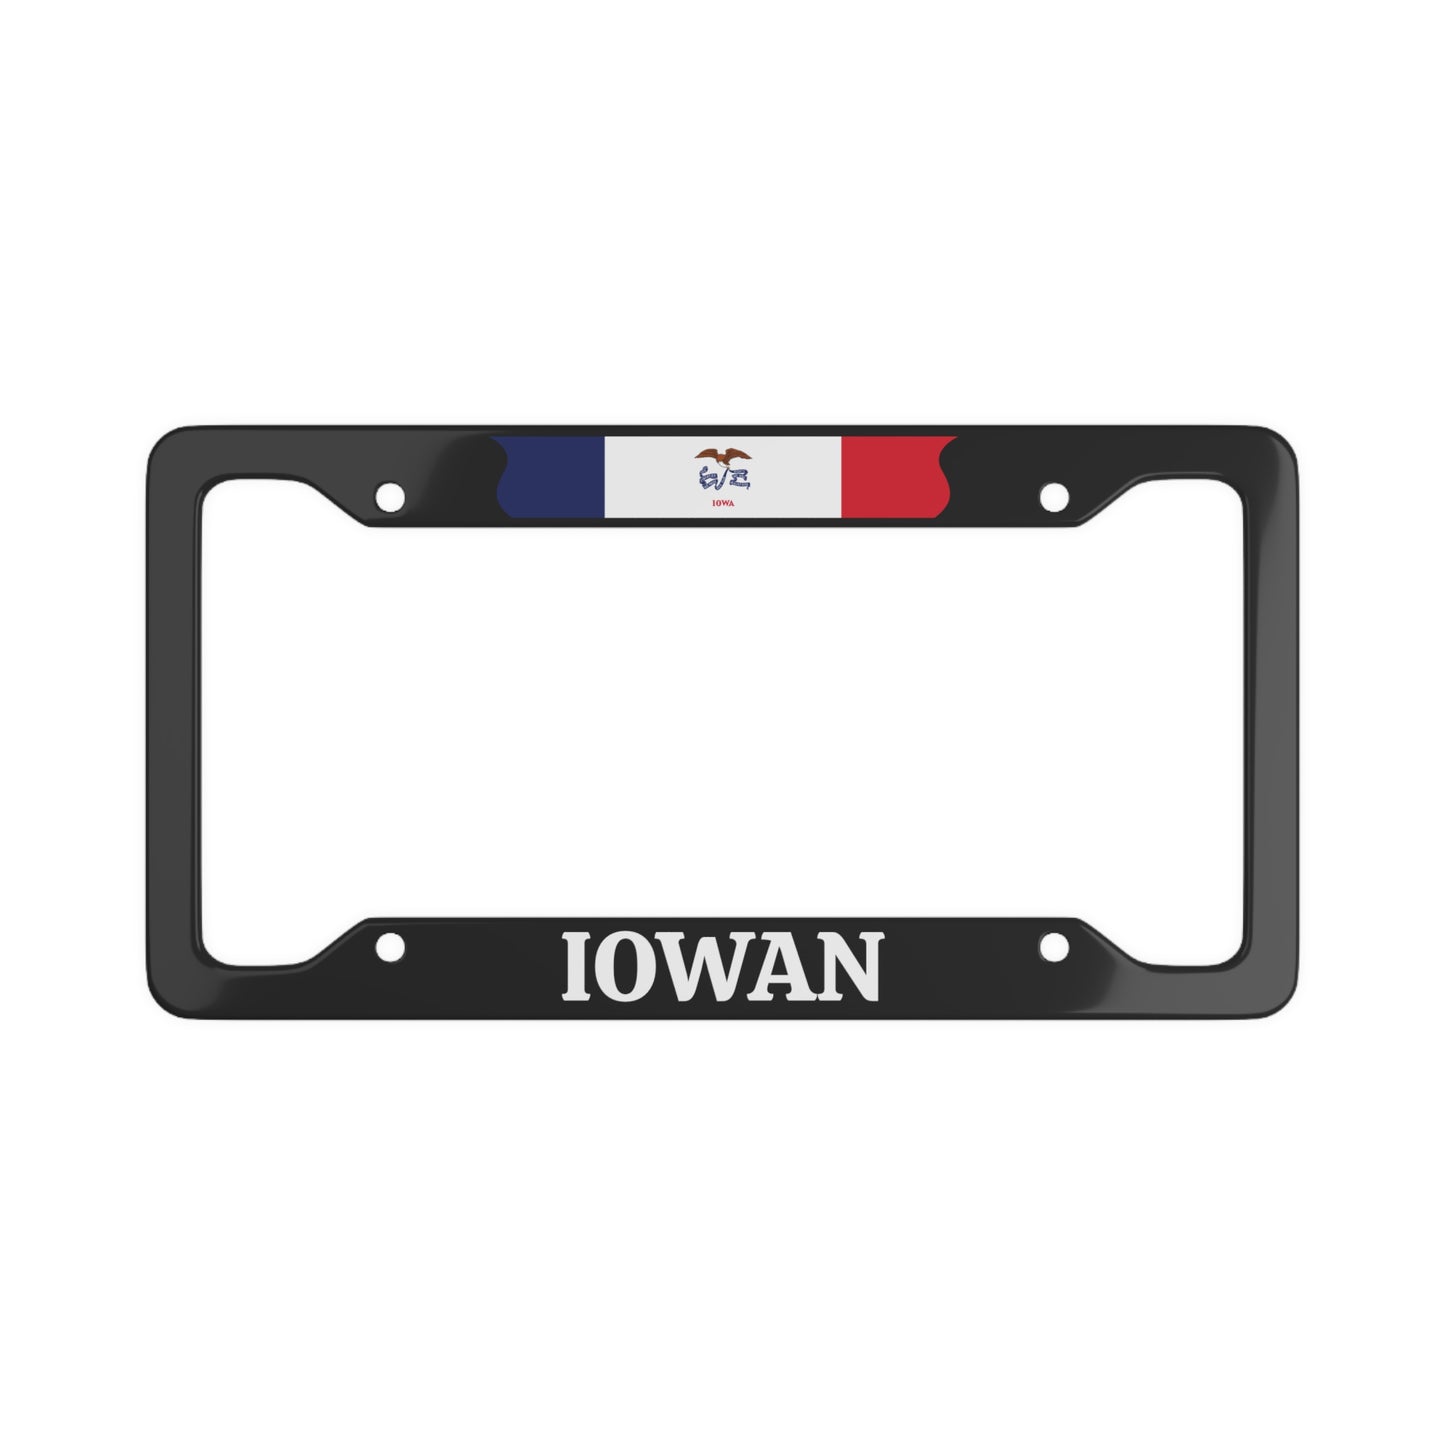 Iowan, Iowa State, USA License Plate Frame